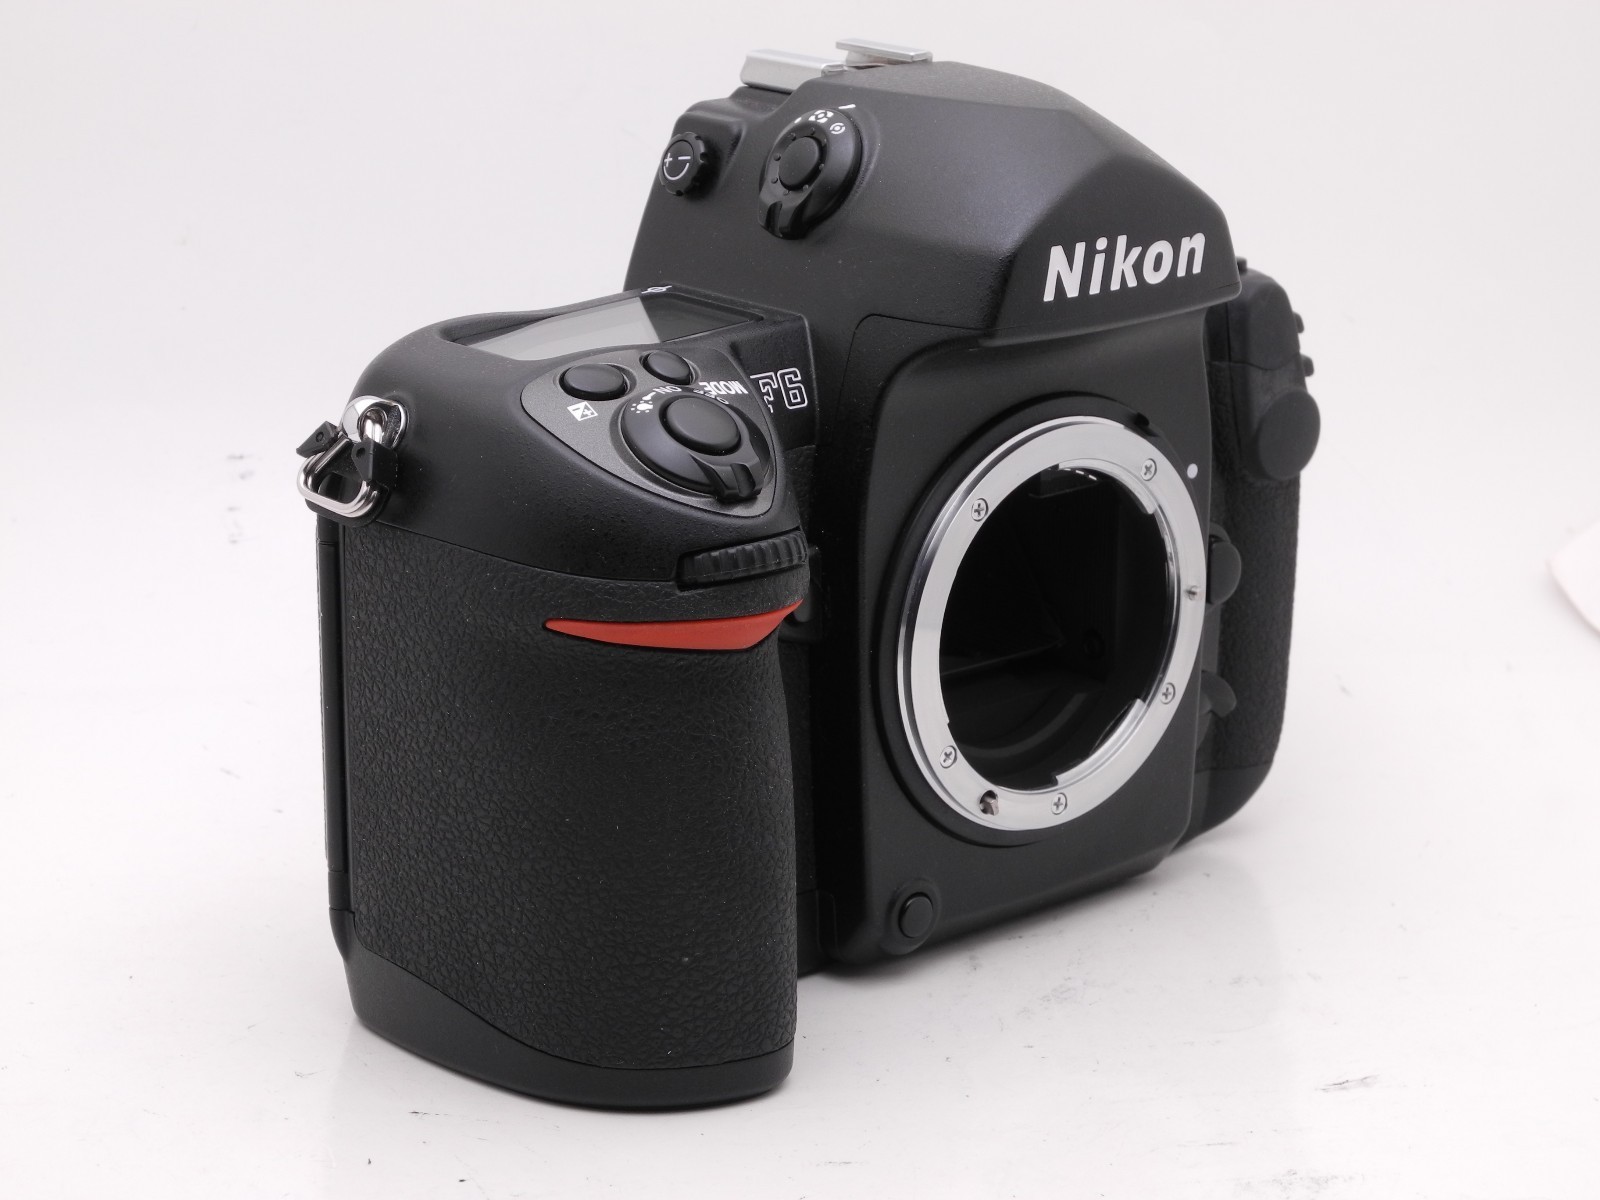 Nikon F6 Video SLR Camera Features